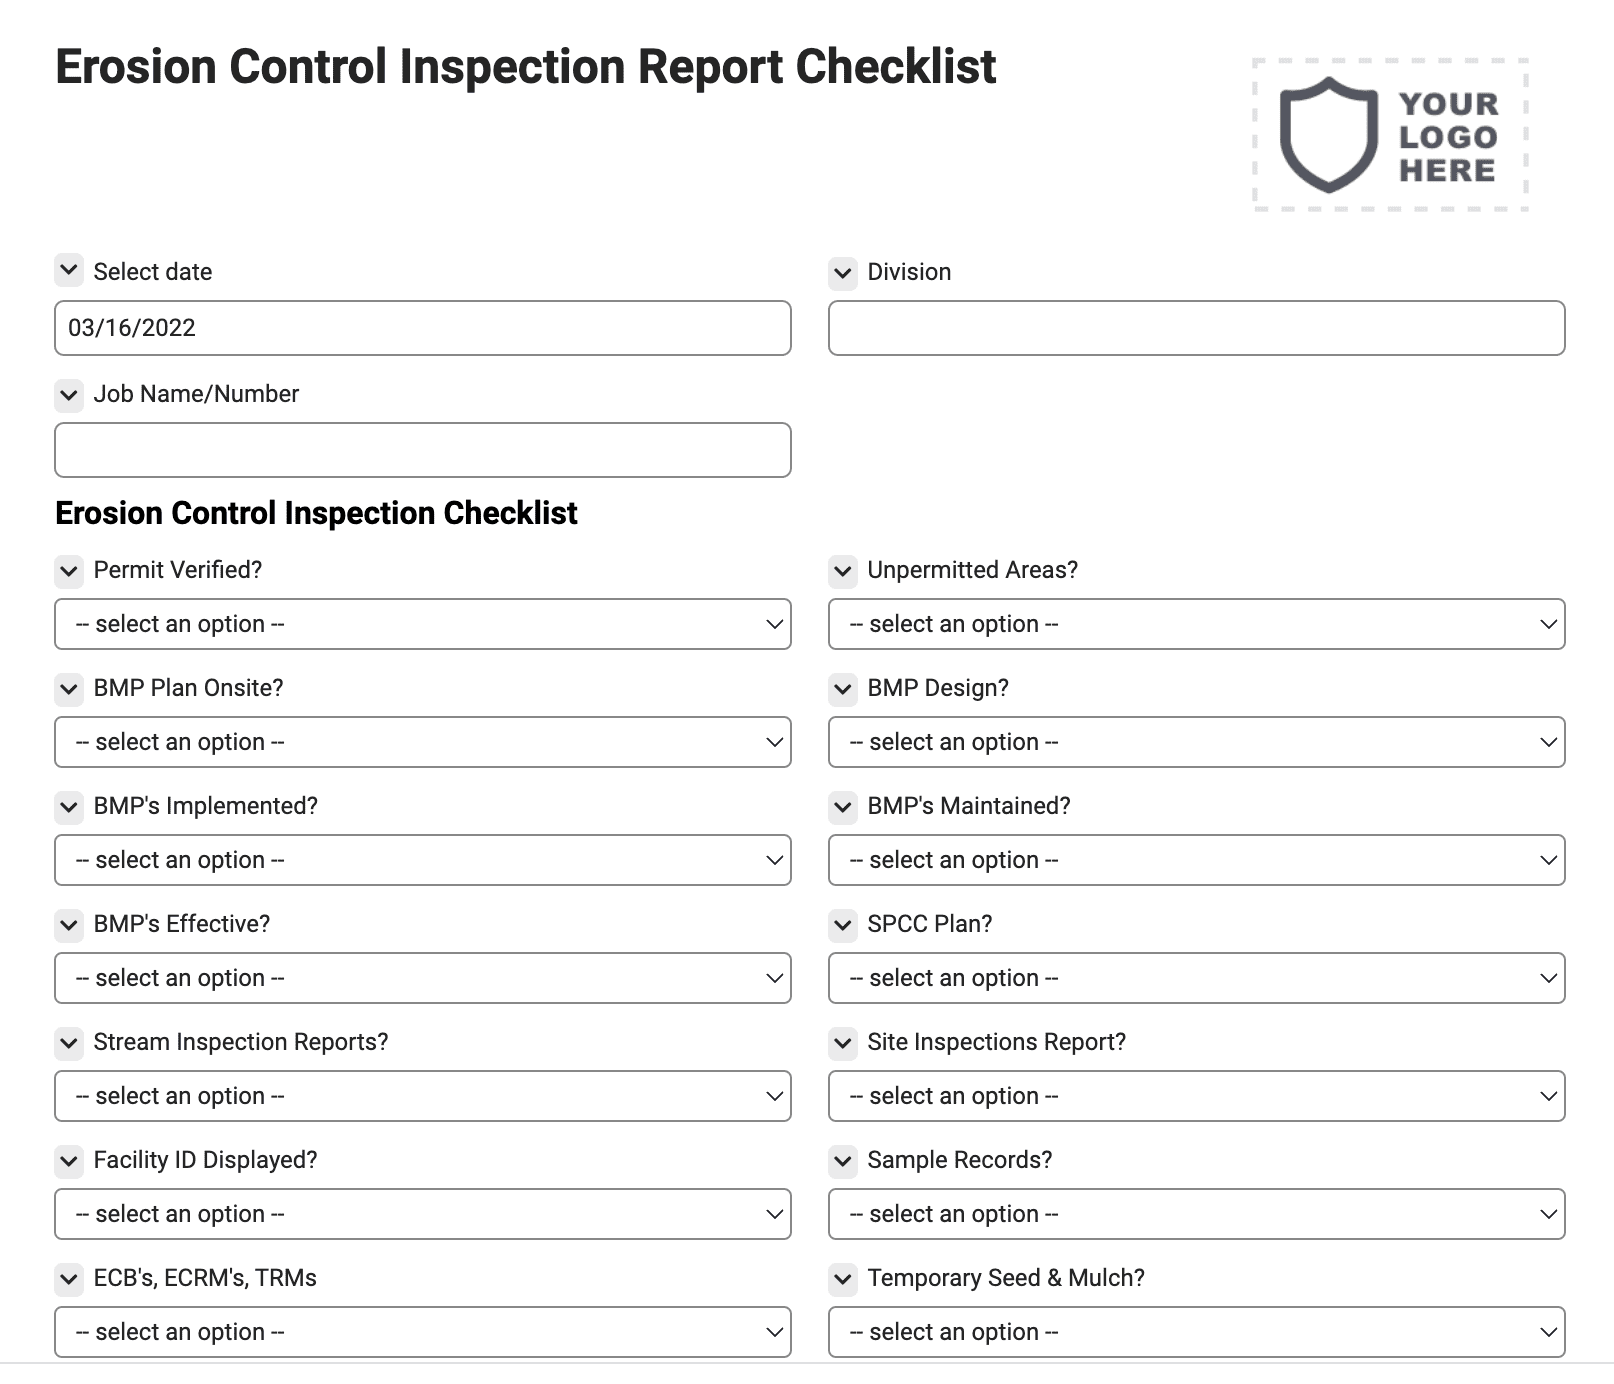 Erosion Control Inspection Report Checklist